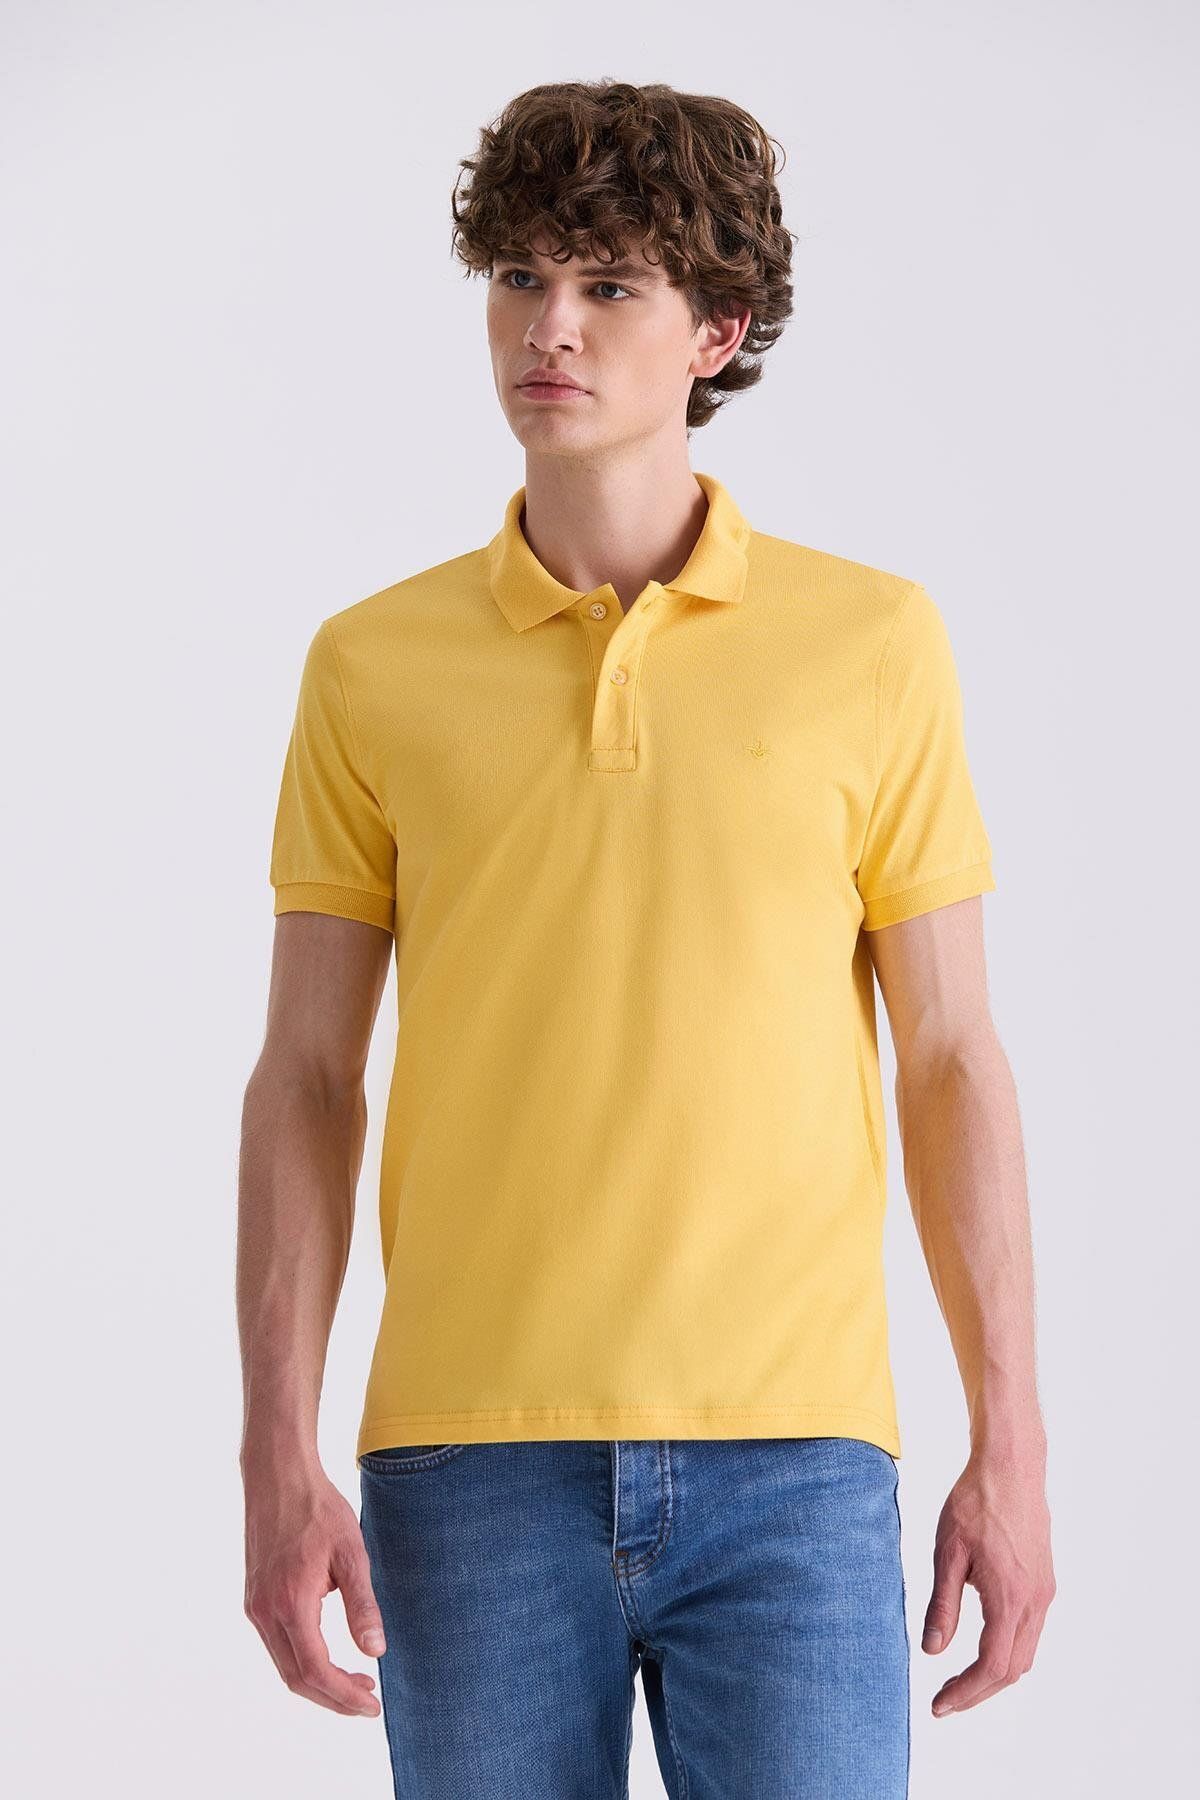 Jakamen Sarı Slim Fit Polo Yaka T-Shirt